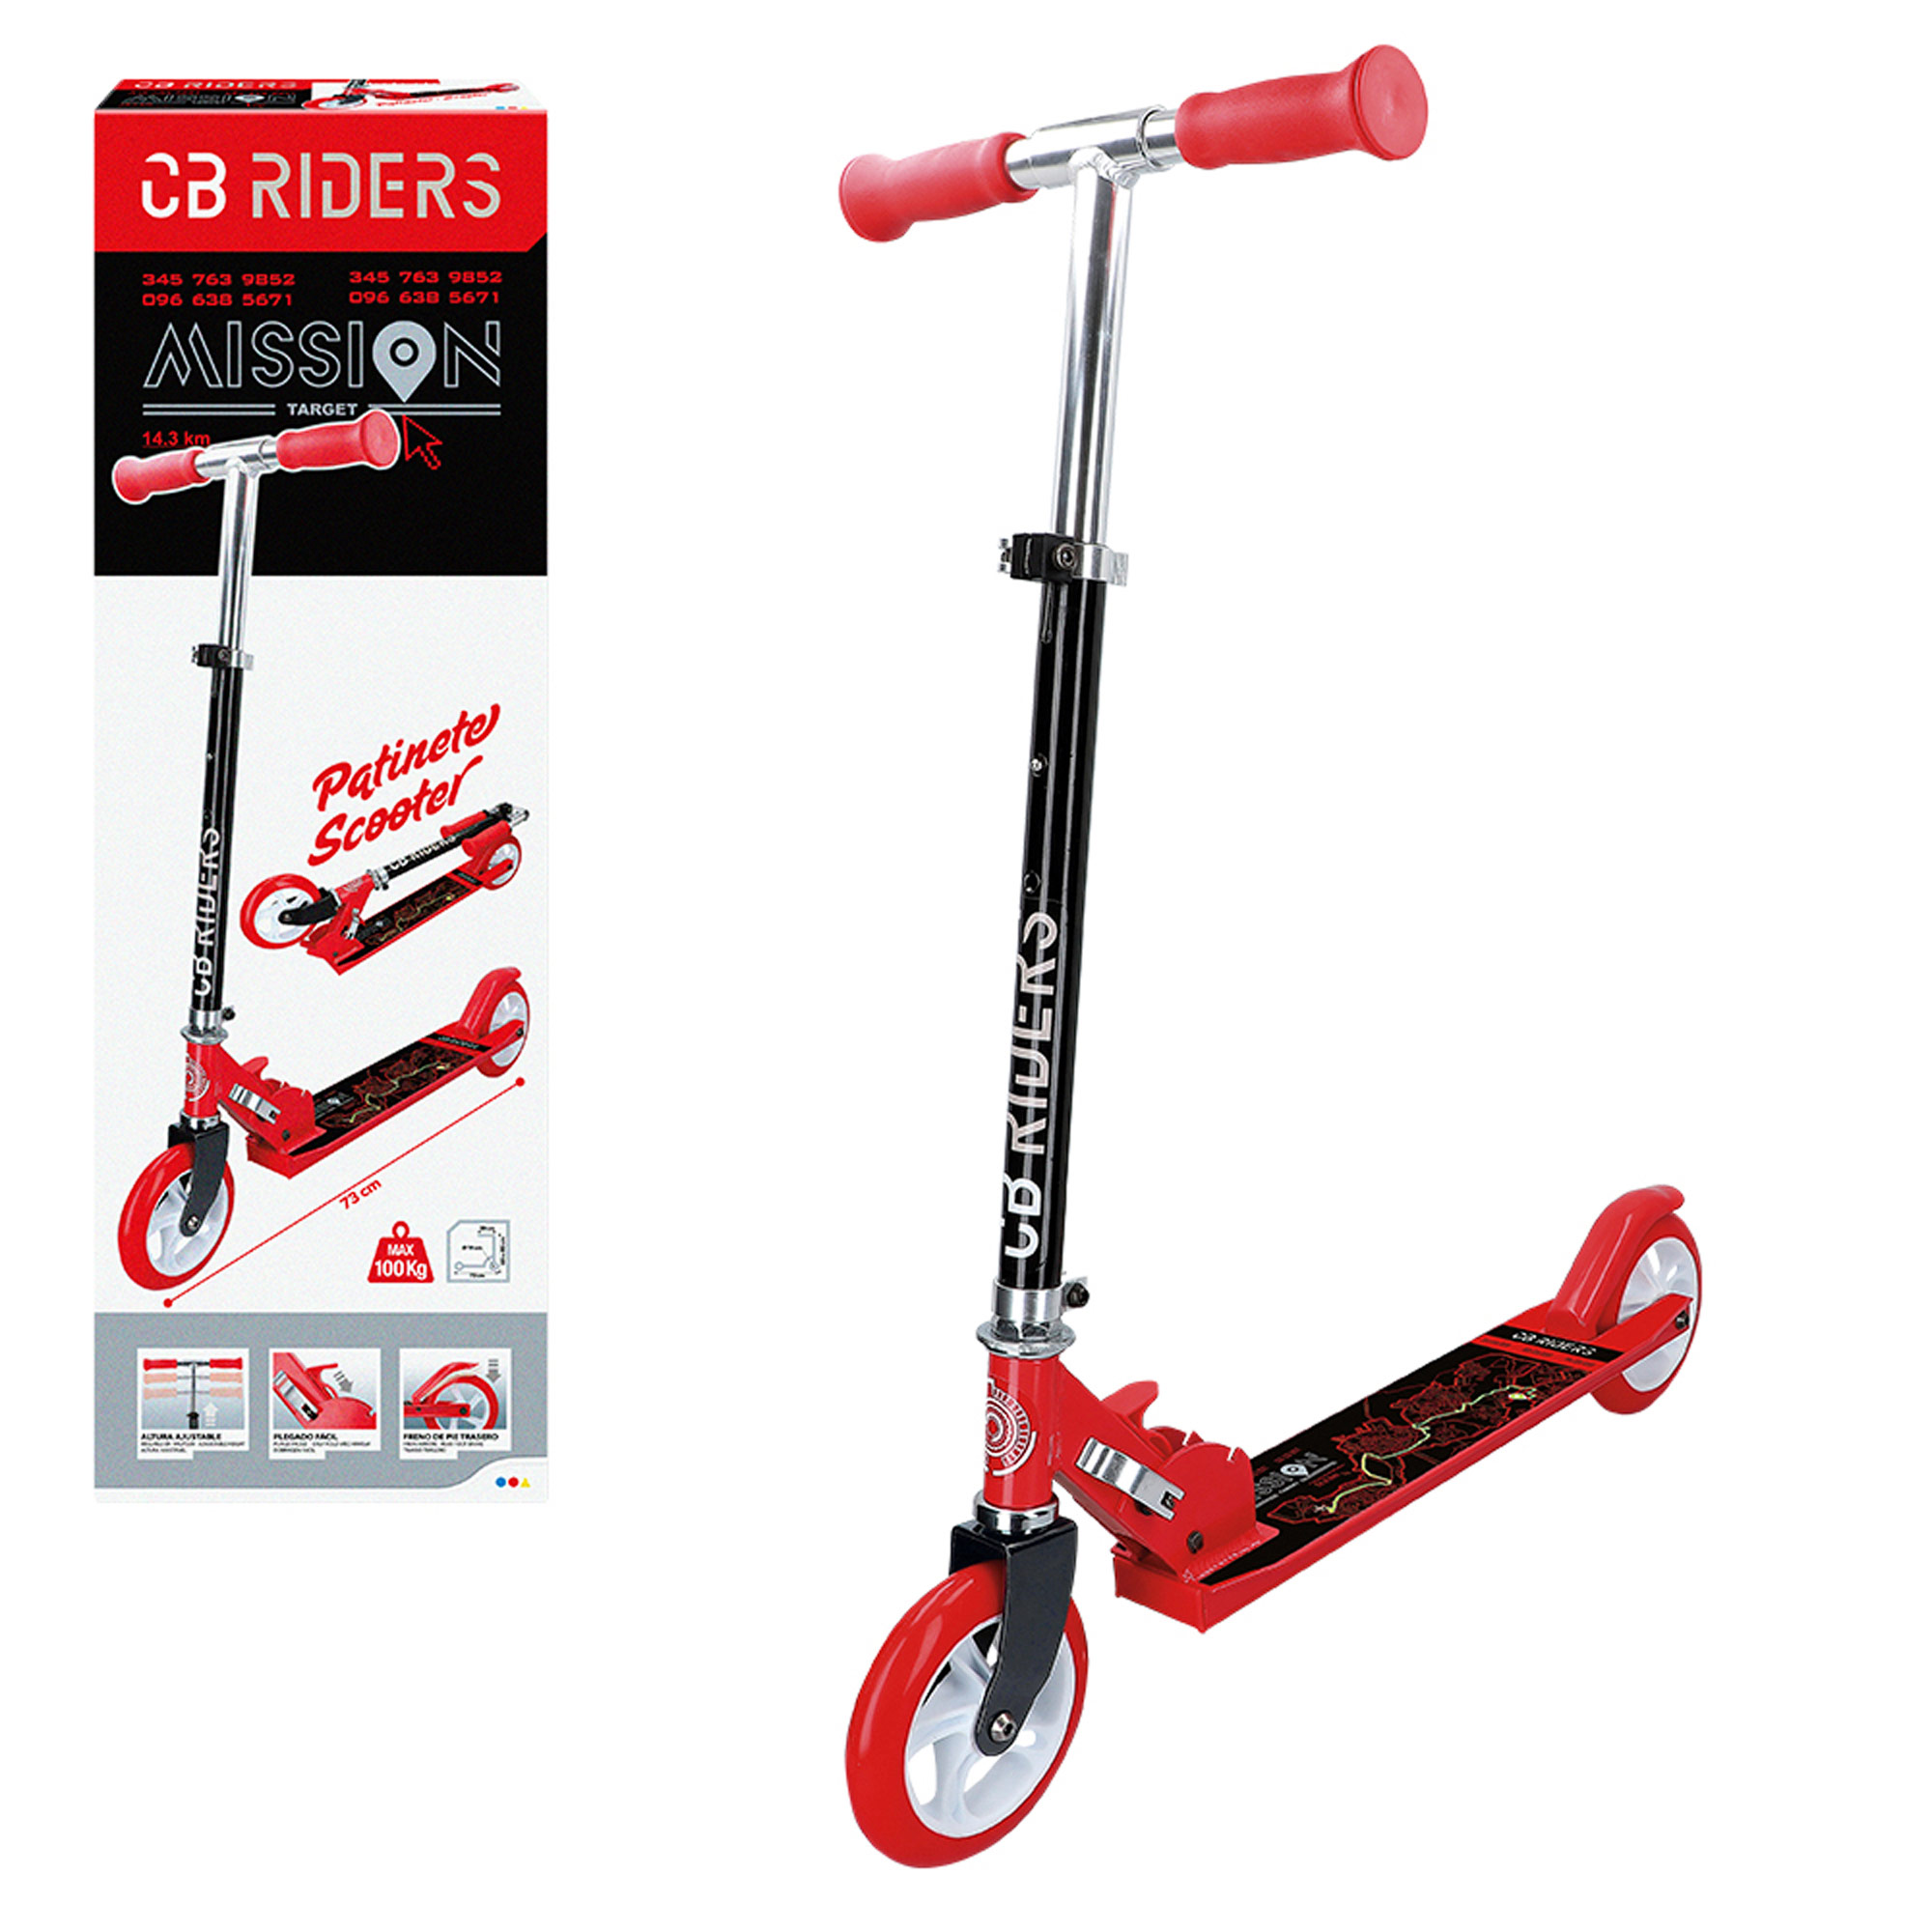 Cb Toys - Patinete 2 ruedas rojo Pro Serie CB Riders